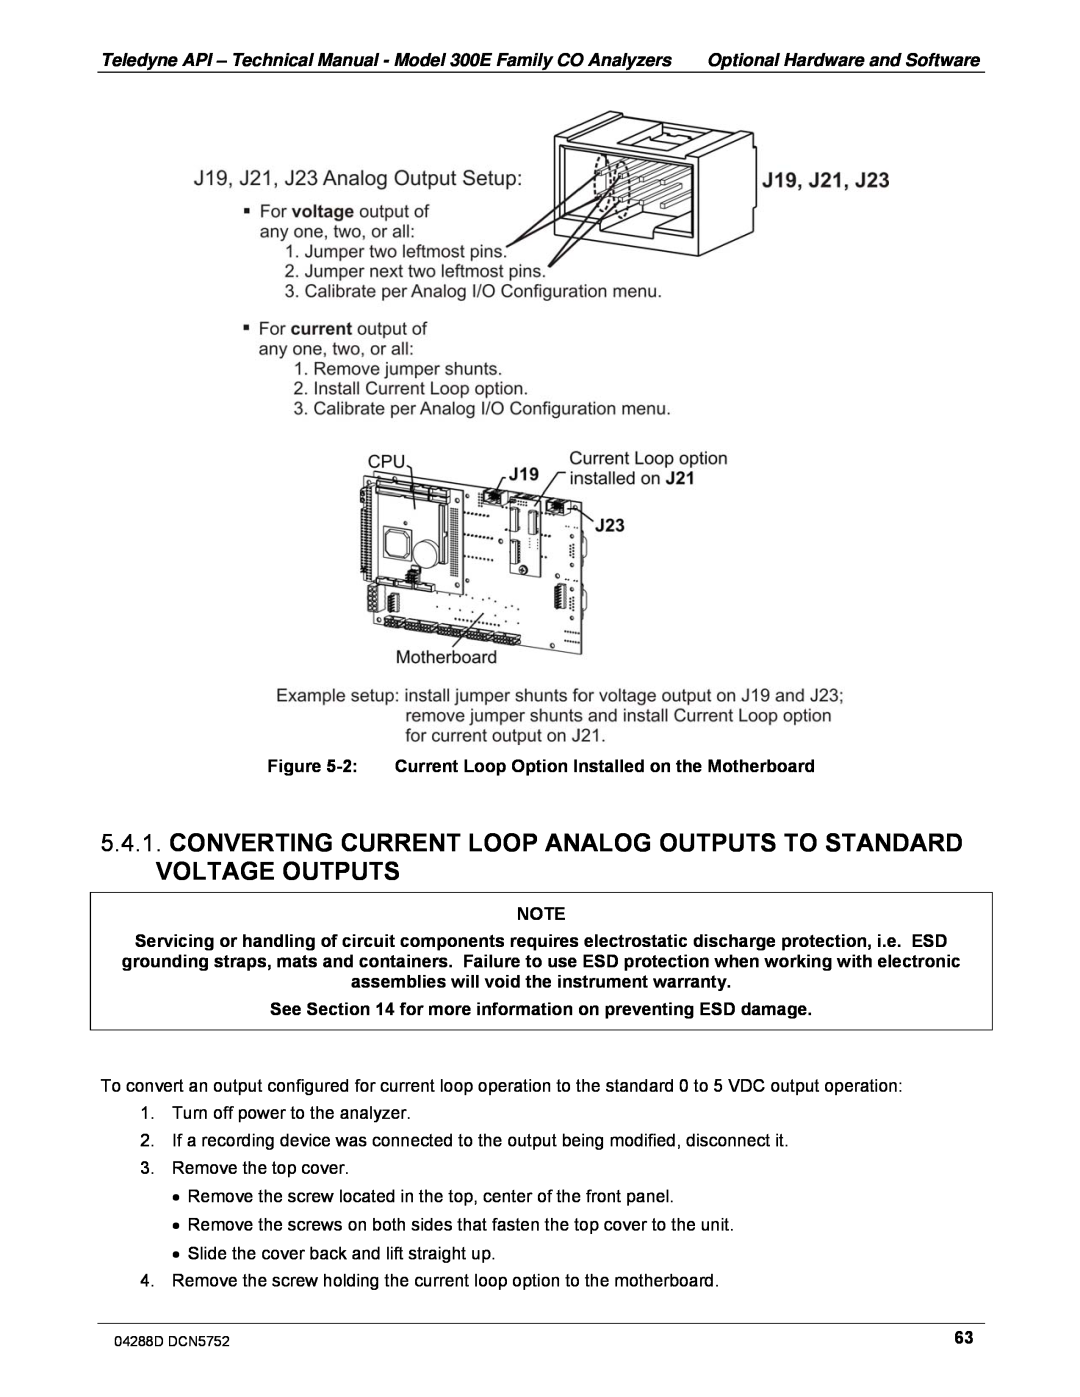 Teledyne M300EM operation manual 2:Current Loop Option Installed on the Motherboard 